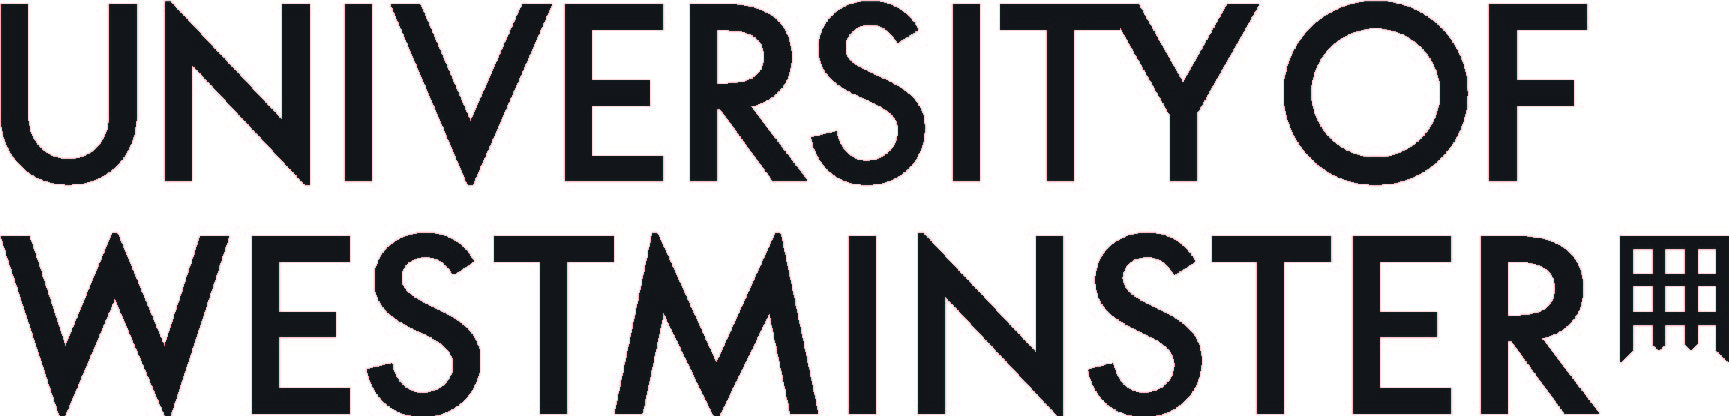 university_of_westminster